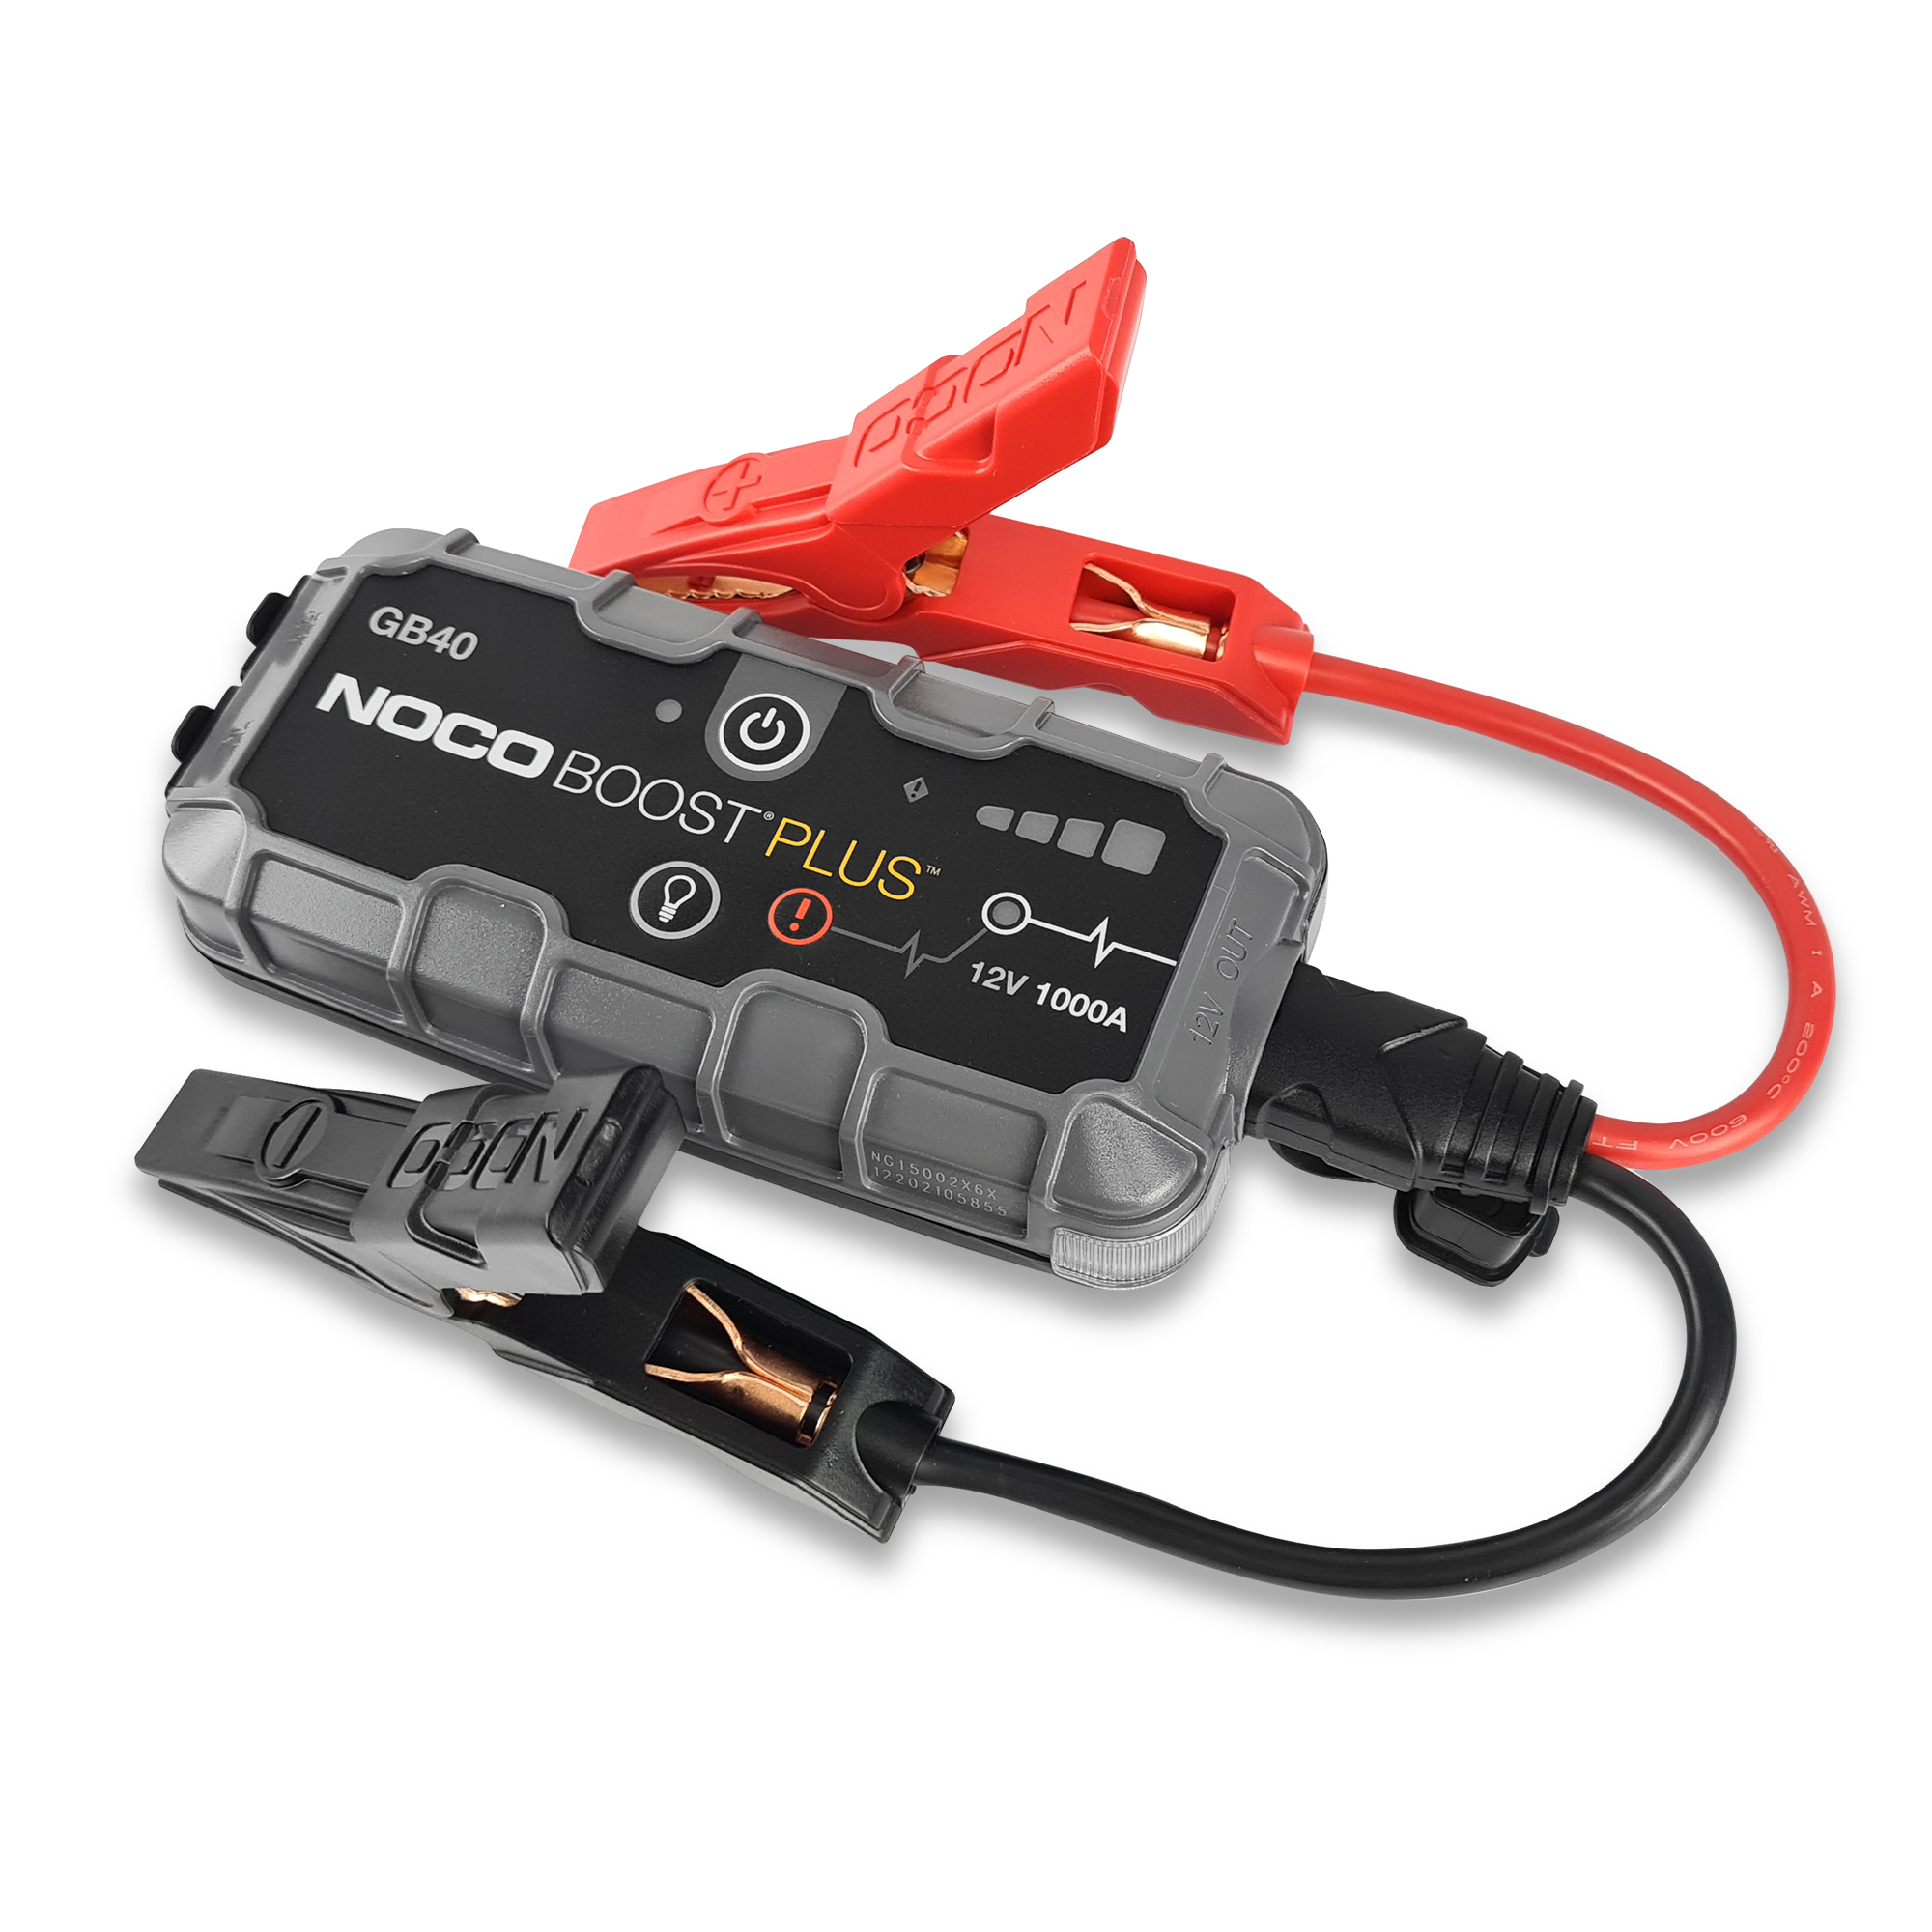 NOCO Genius Boost Plus GB40 Jump-Starter Power Pack